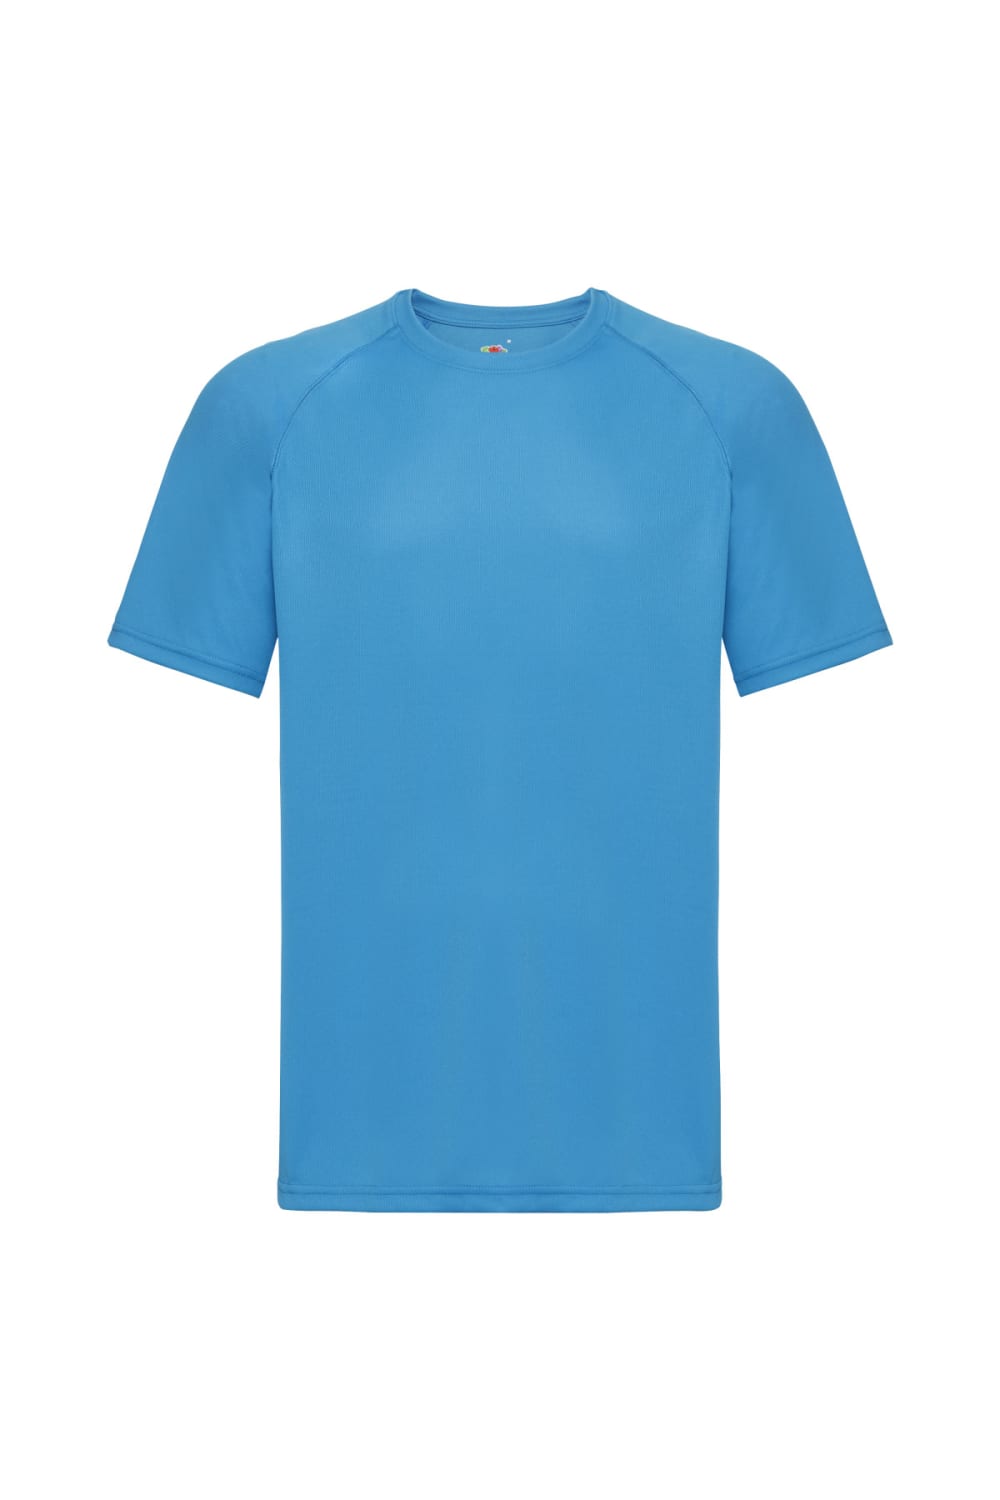 Fruit Of The Loom Mens Performance Sportswear T-Shirt (Azure Blue)